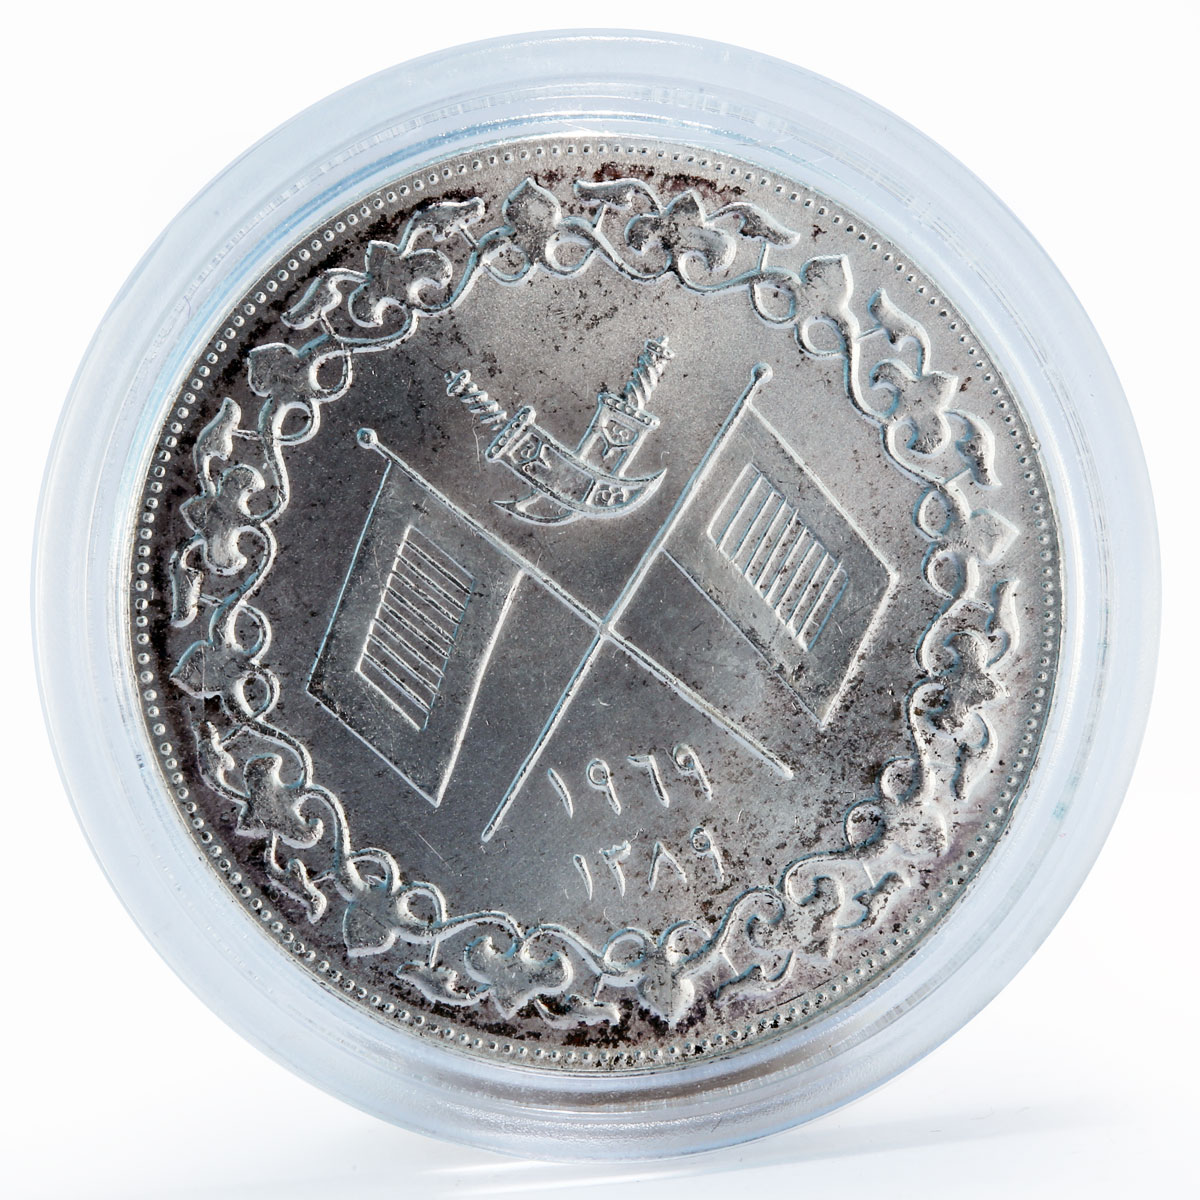 Ras al-Khaimah 5 riyals crossed flags proof silver coin 1969